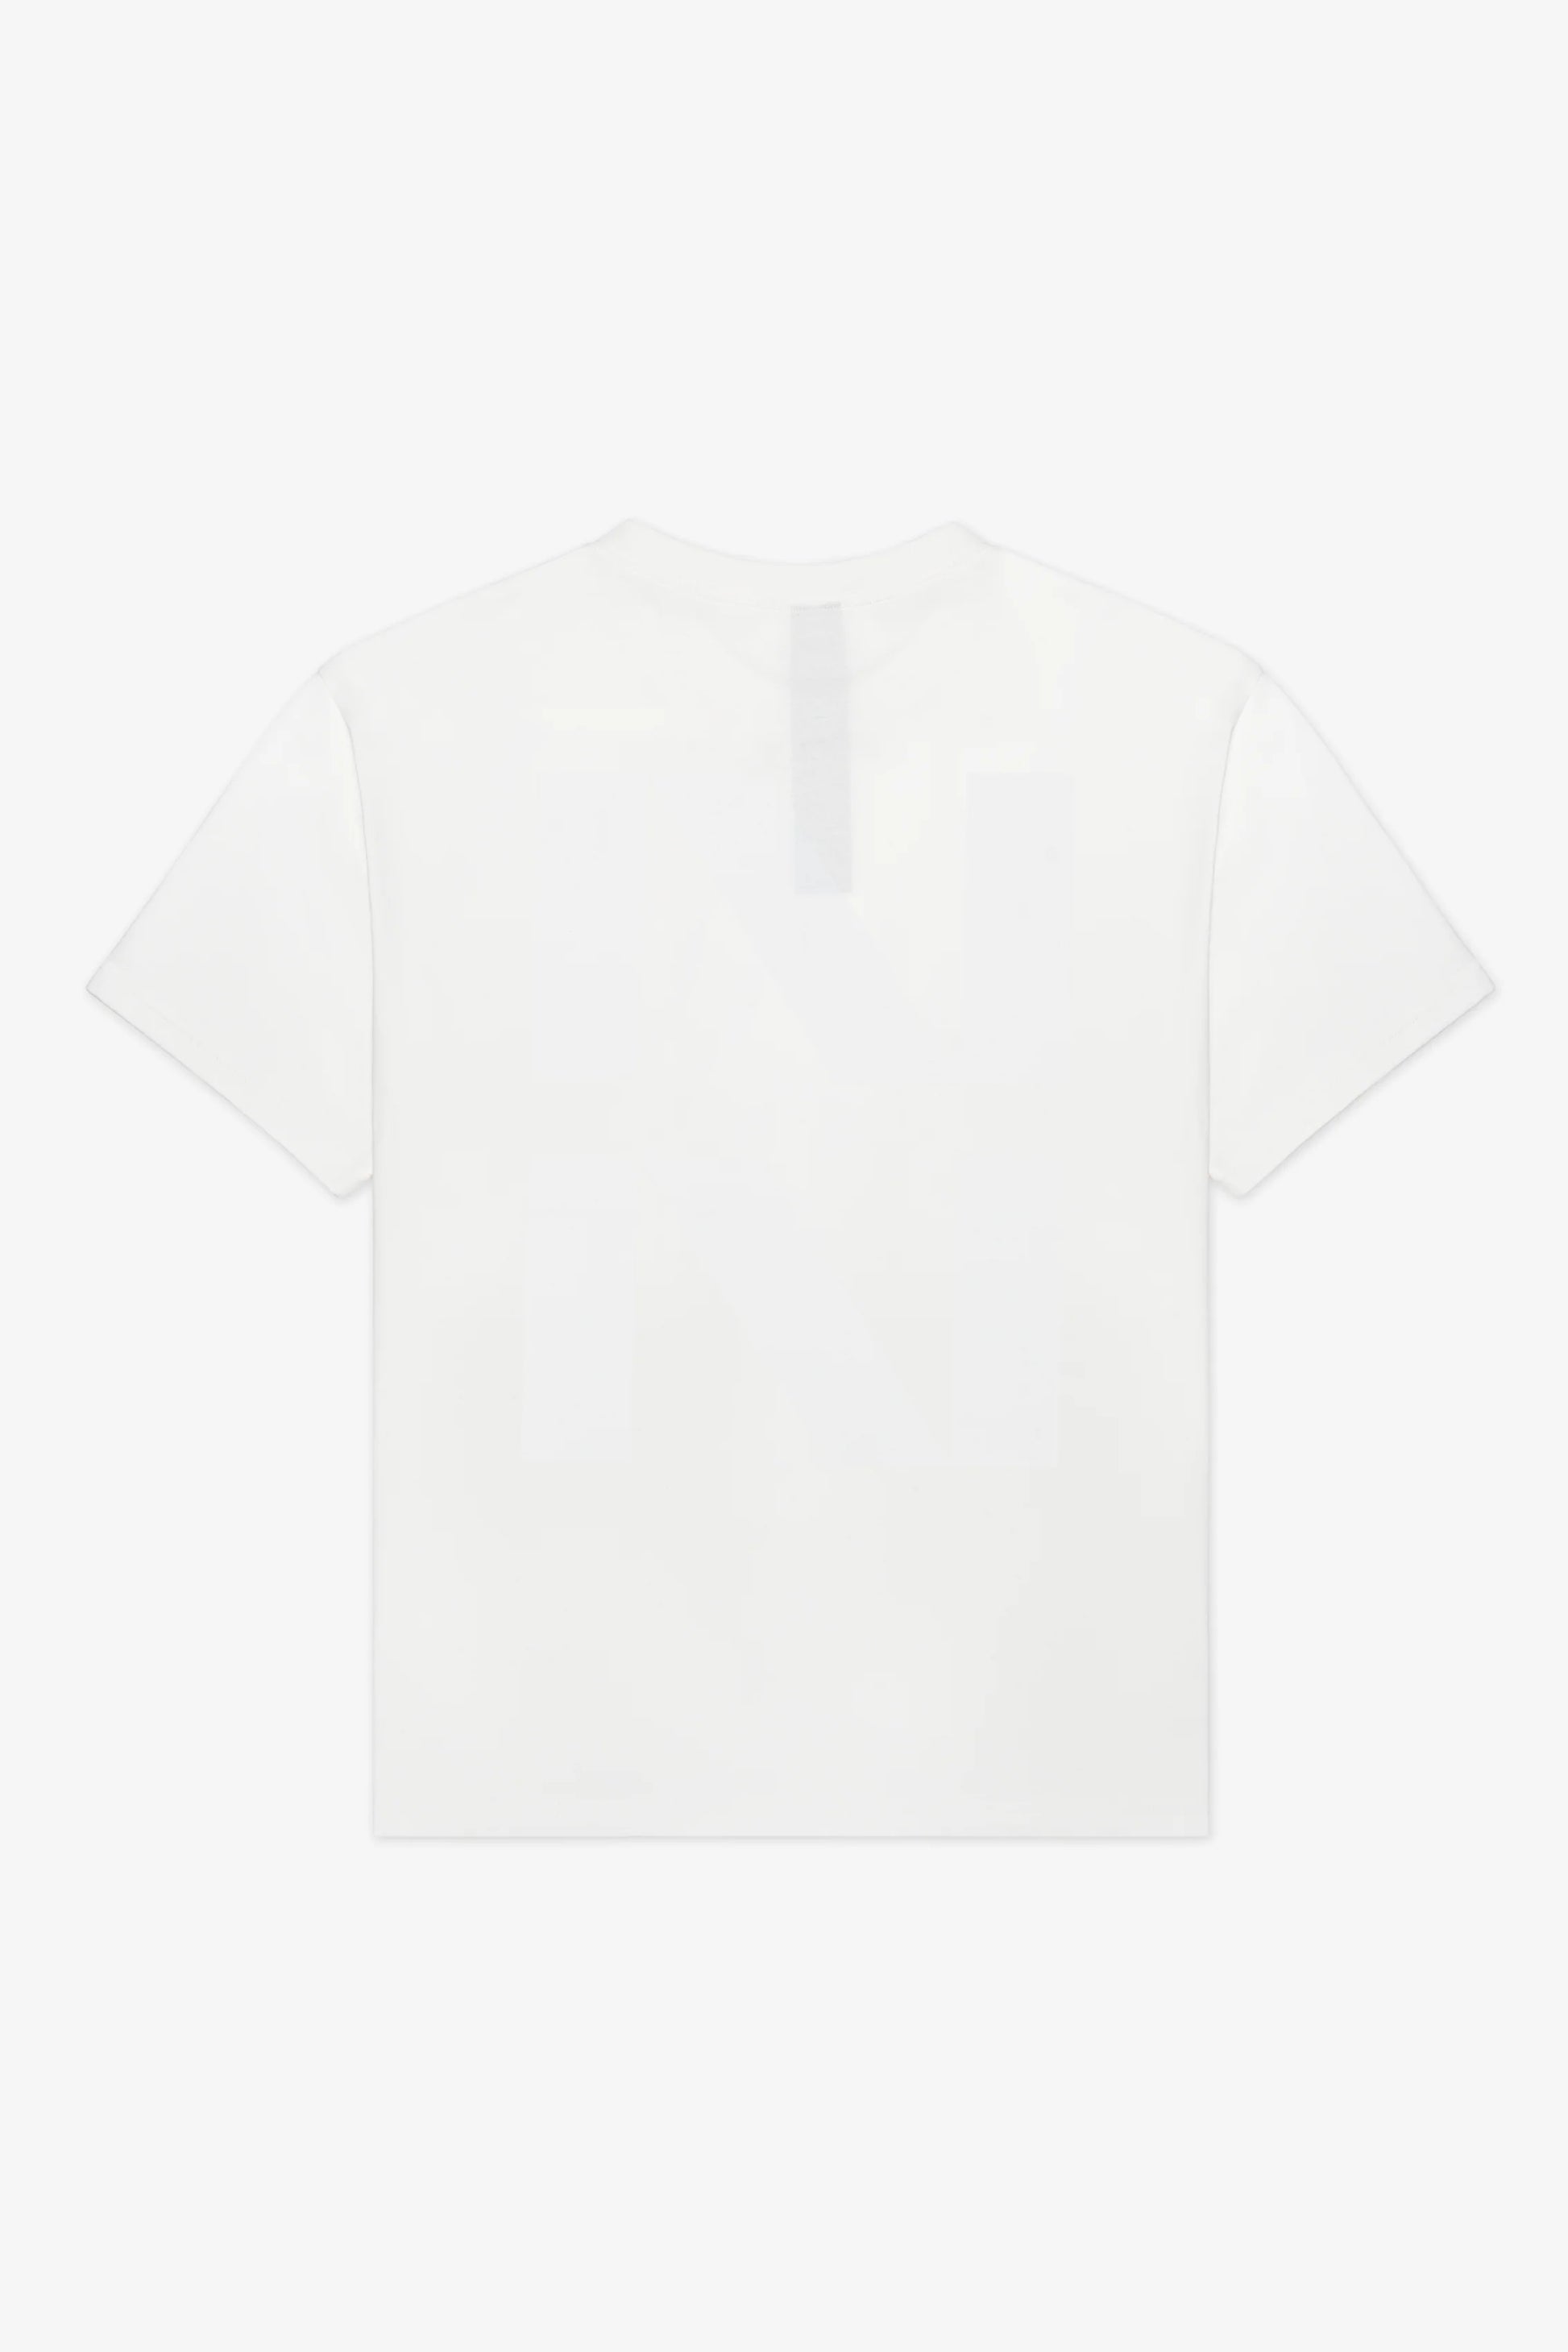 Back of white oversized t-shirt